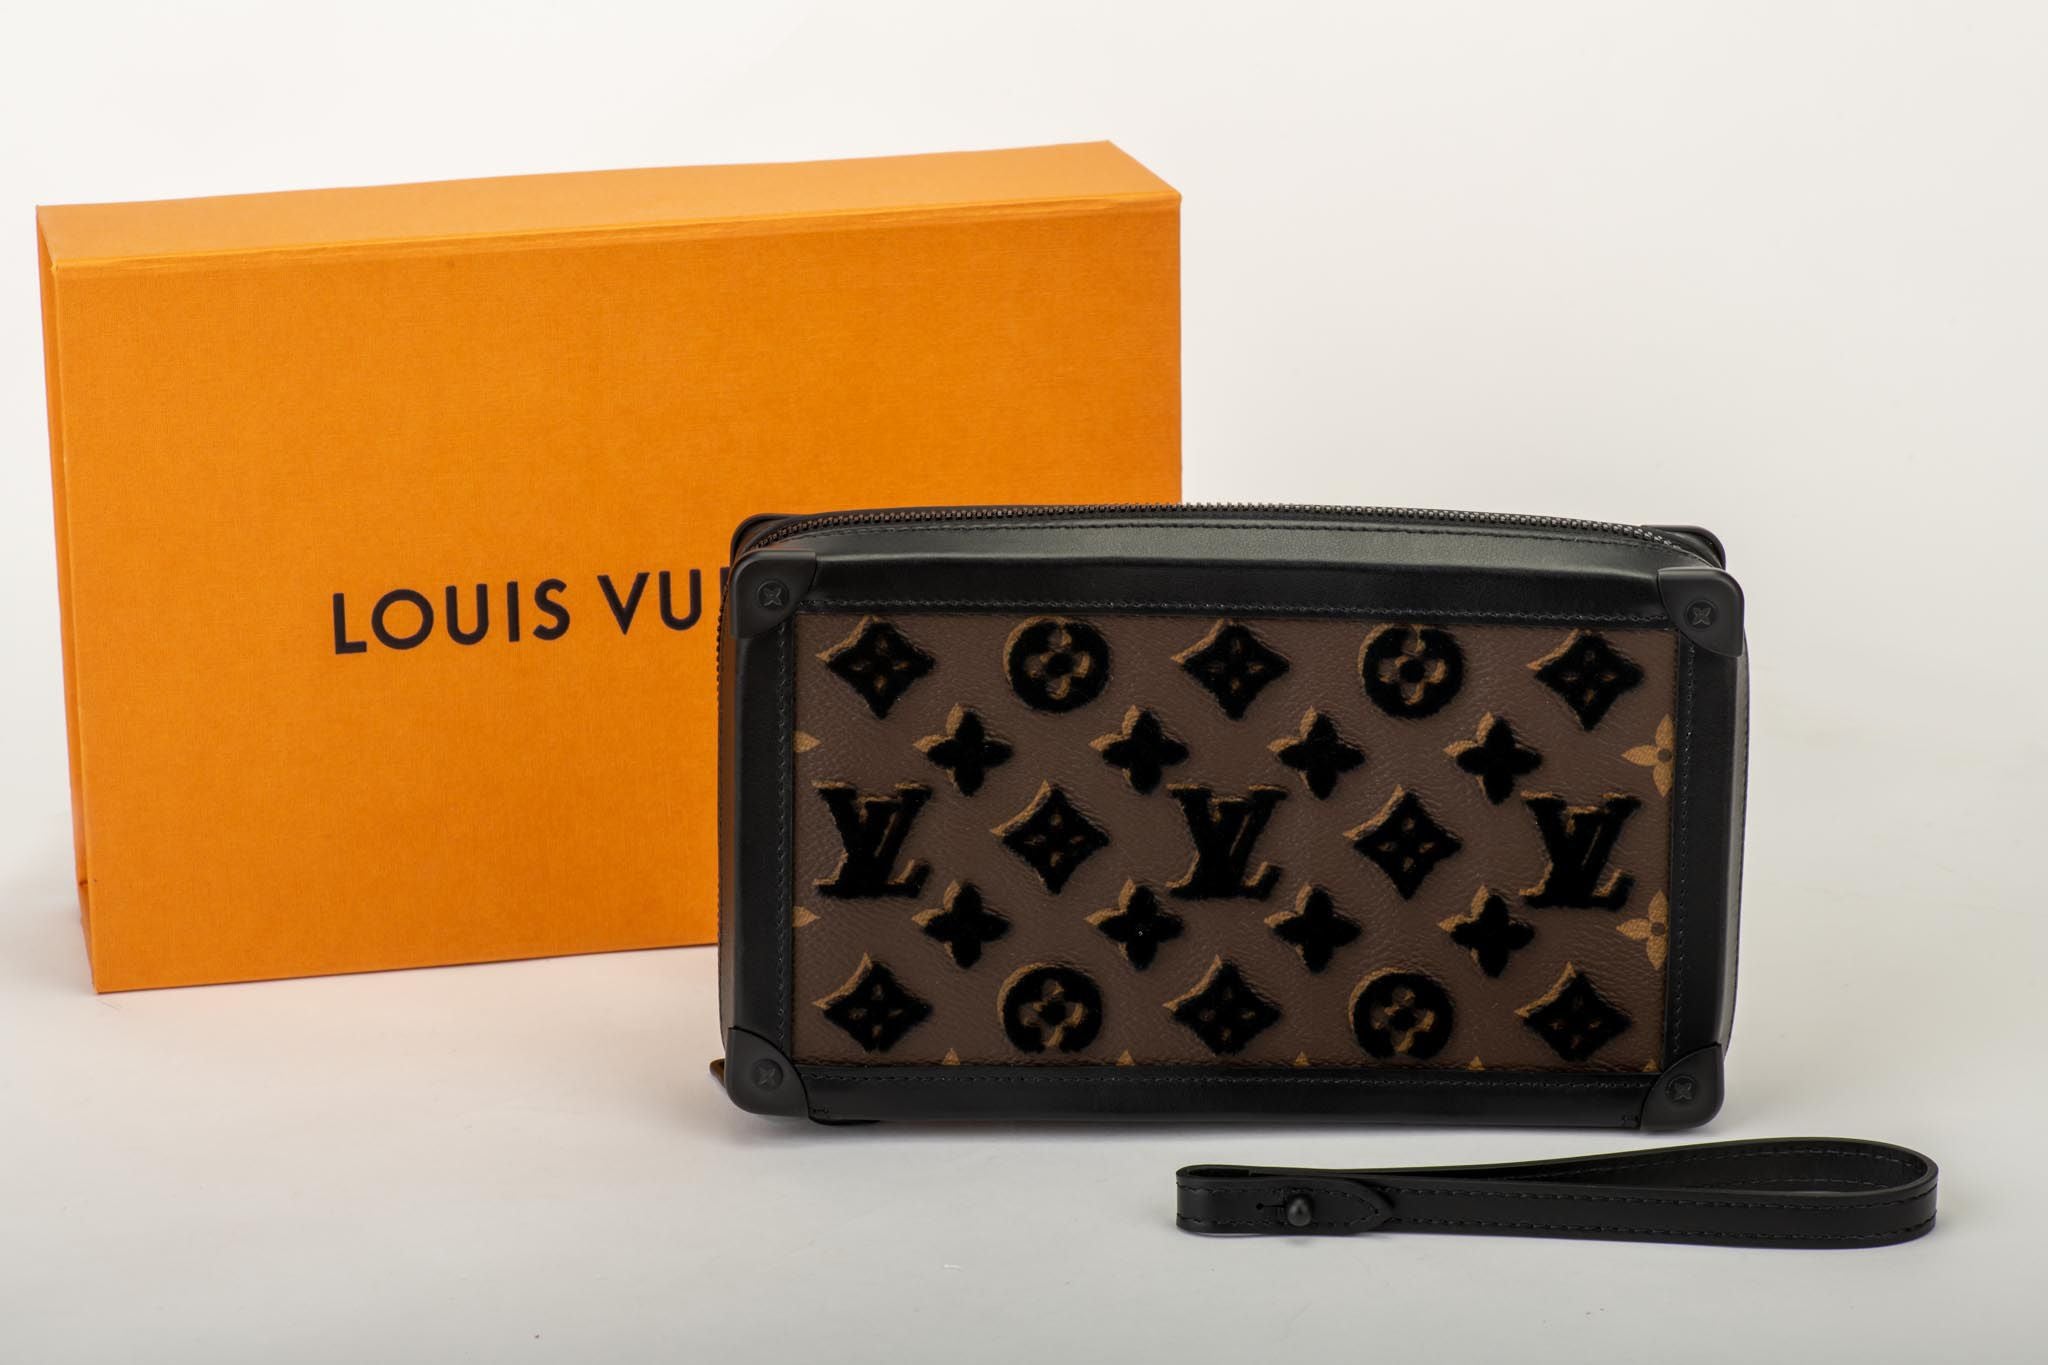 New in Box Louis Vuitton Runway SS 2020 Velvet Clutch Bag For Sale